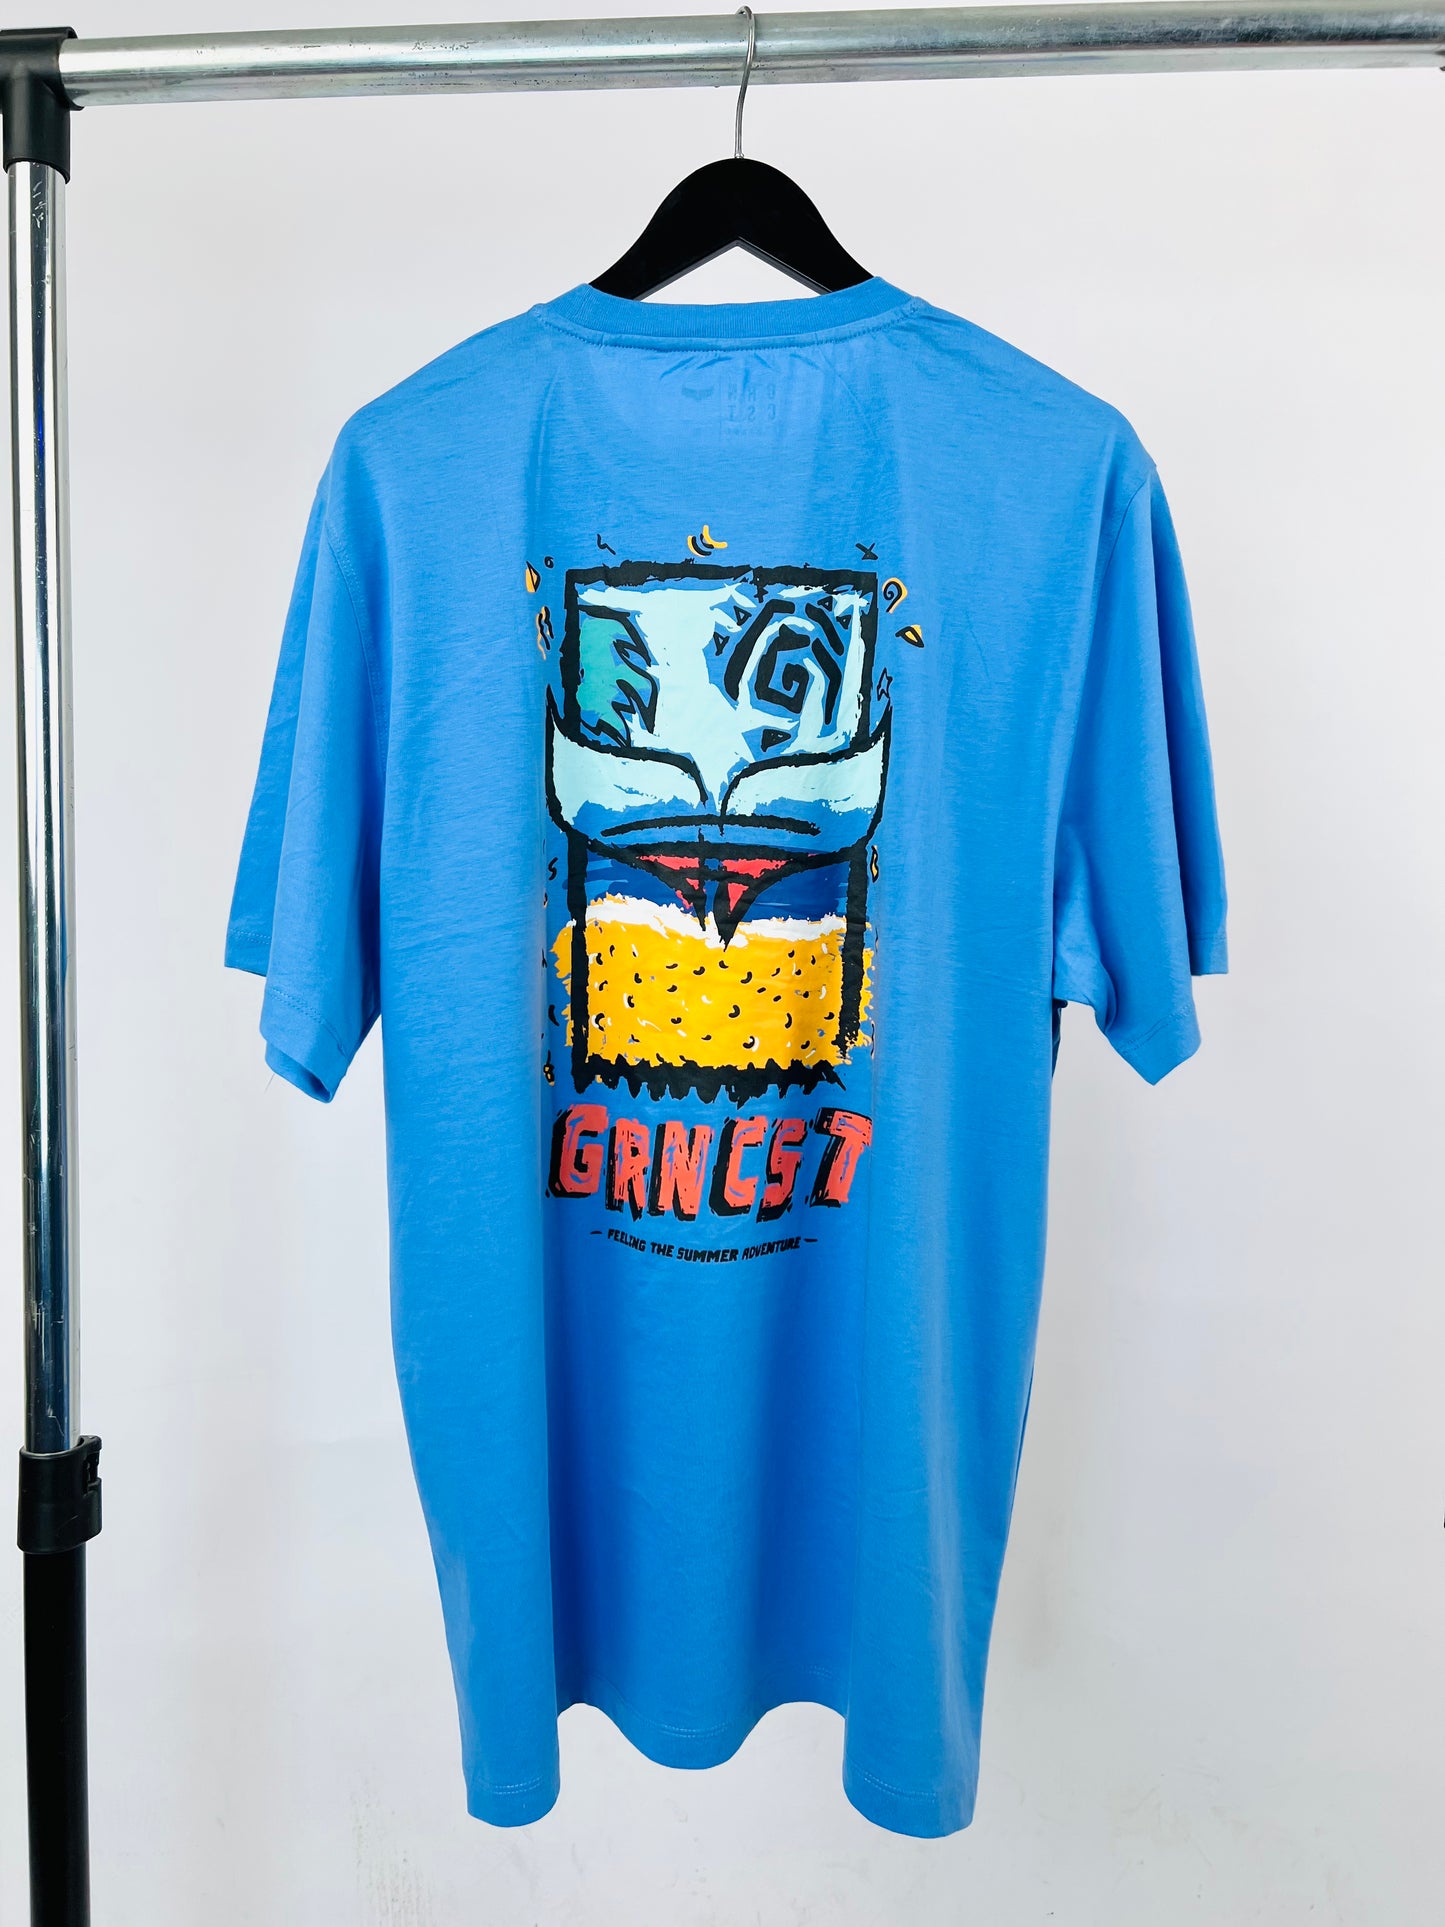 Green Coast Backprint T-shirt in blue